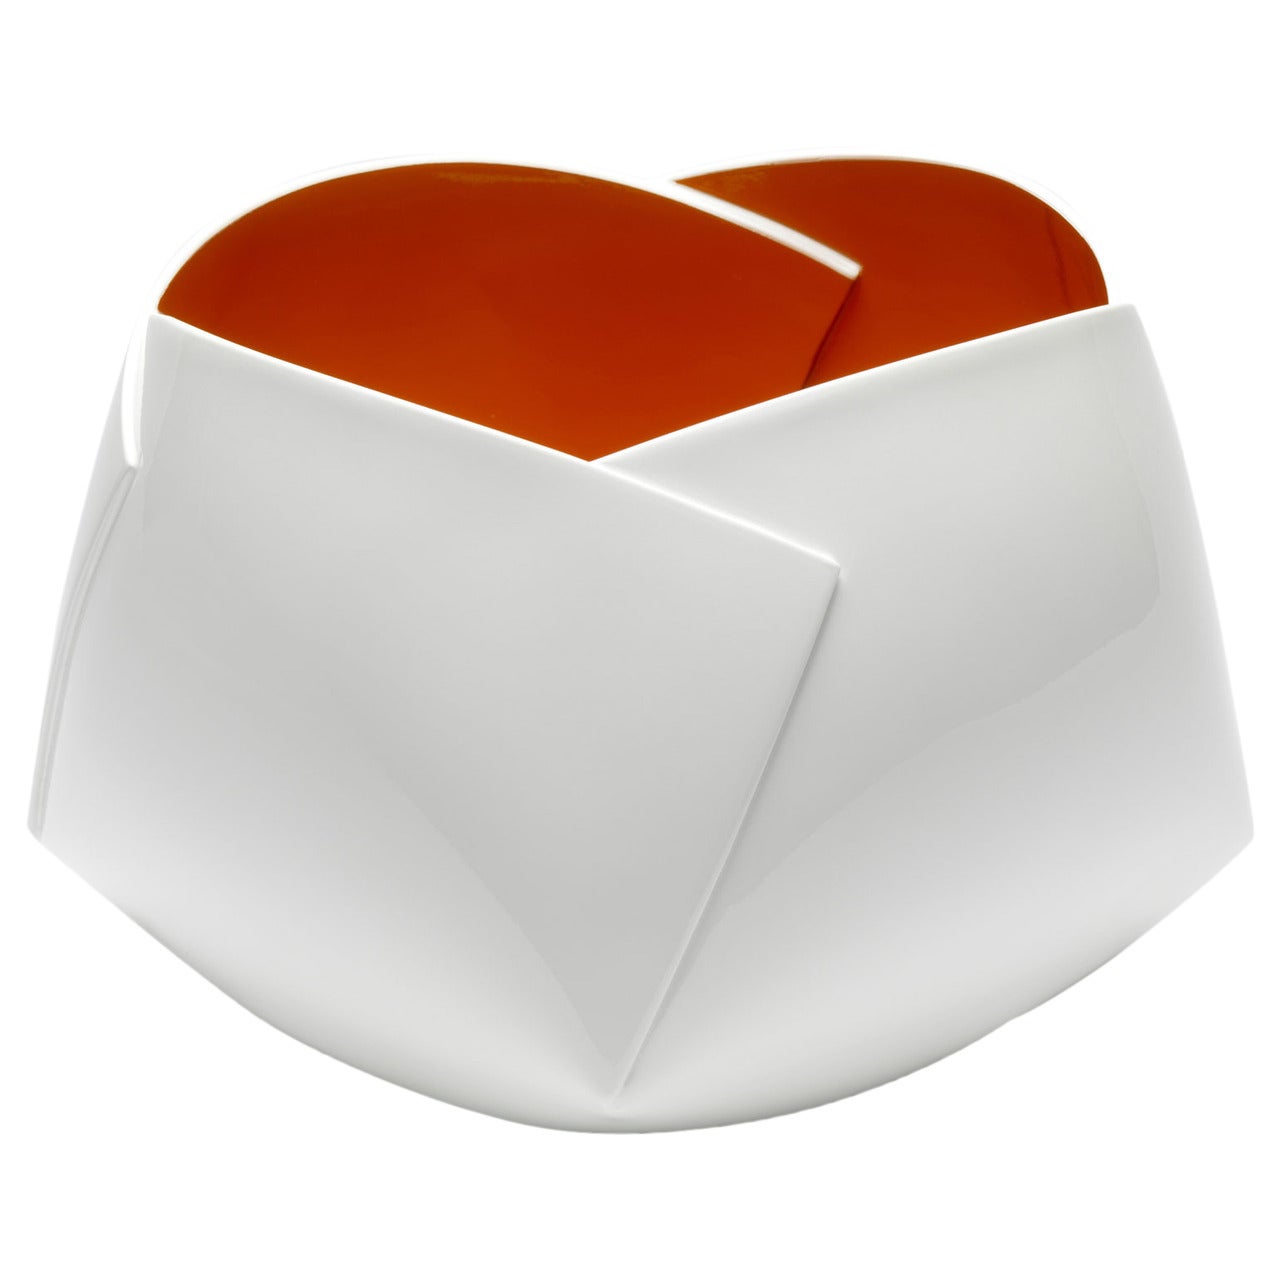 Orange and White Origami Vessel by Ann Van Hoey